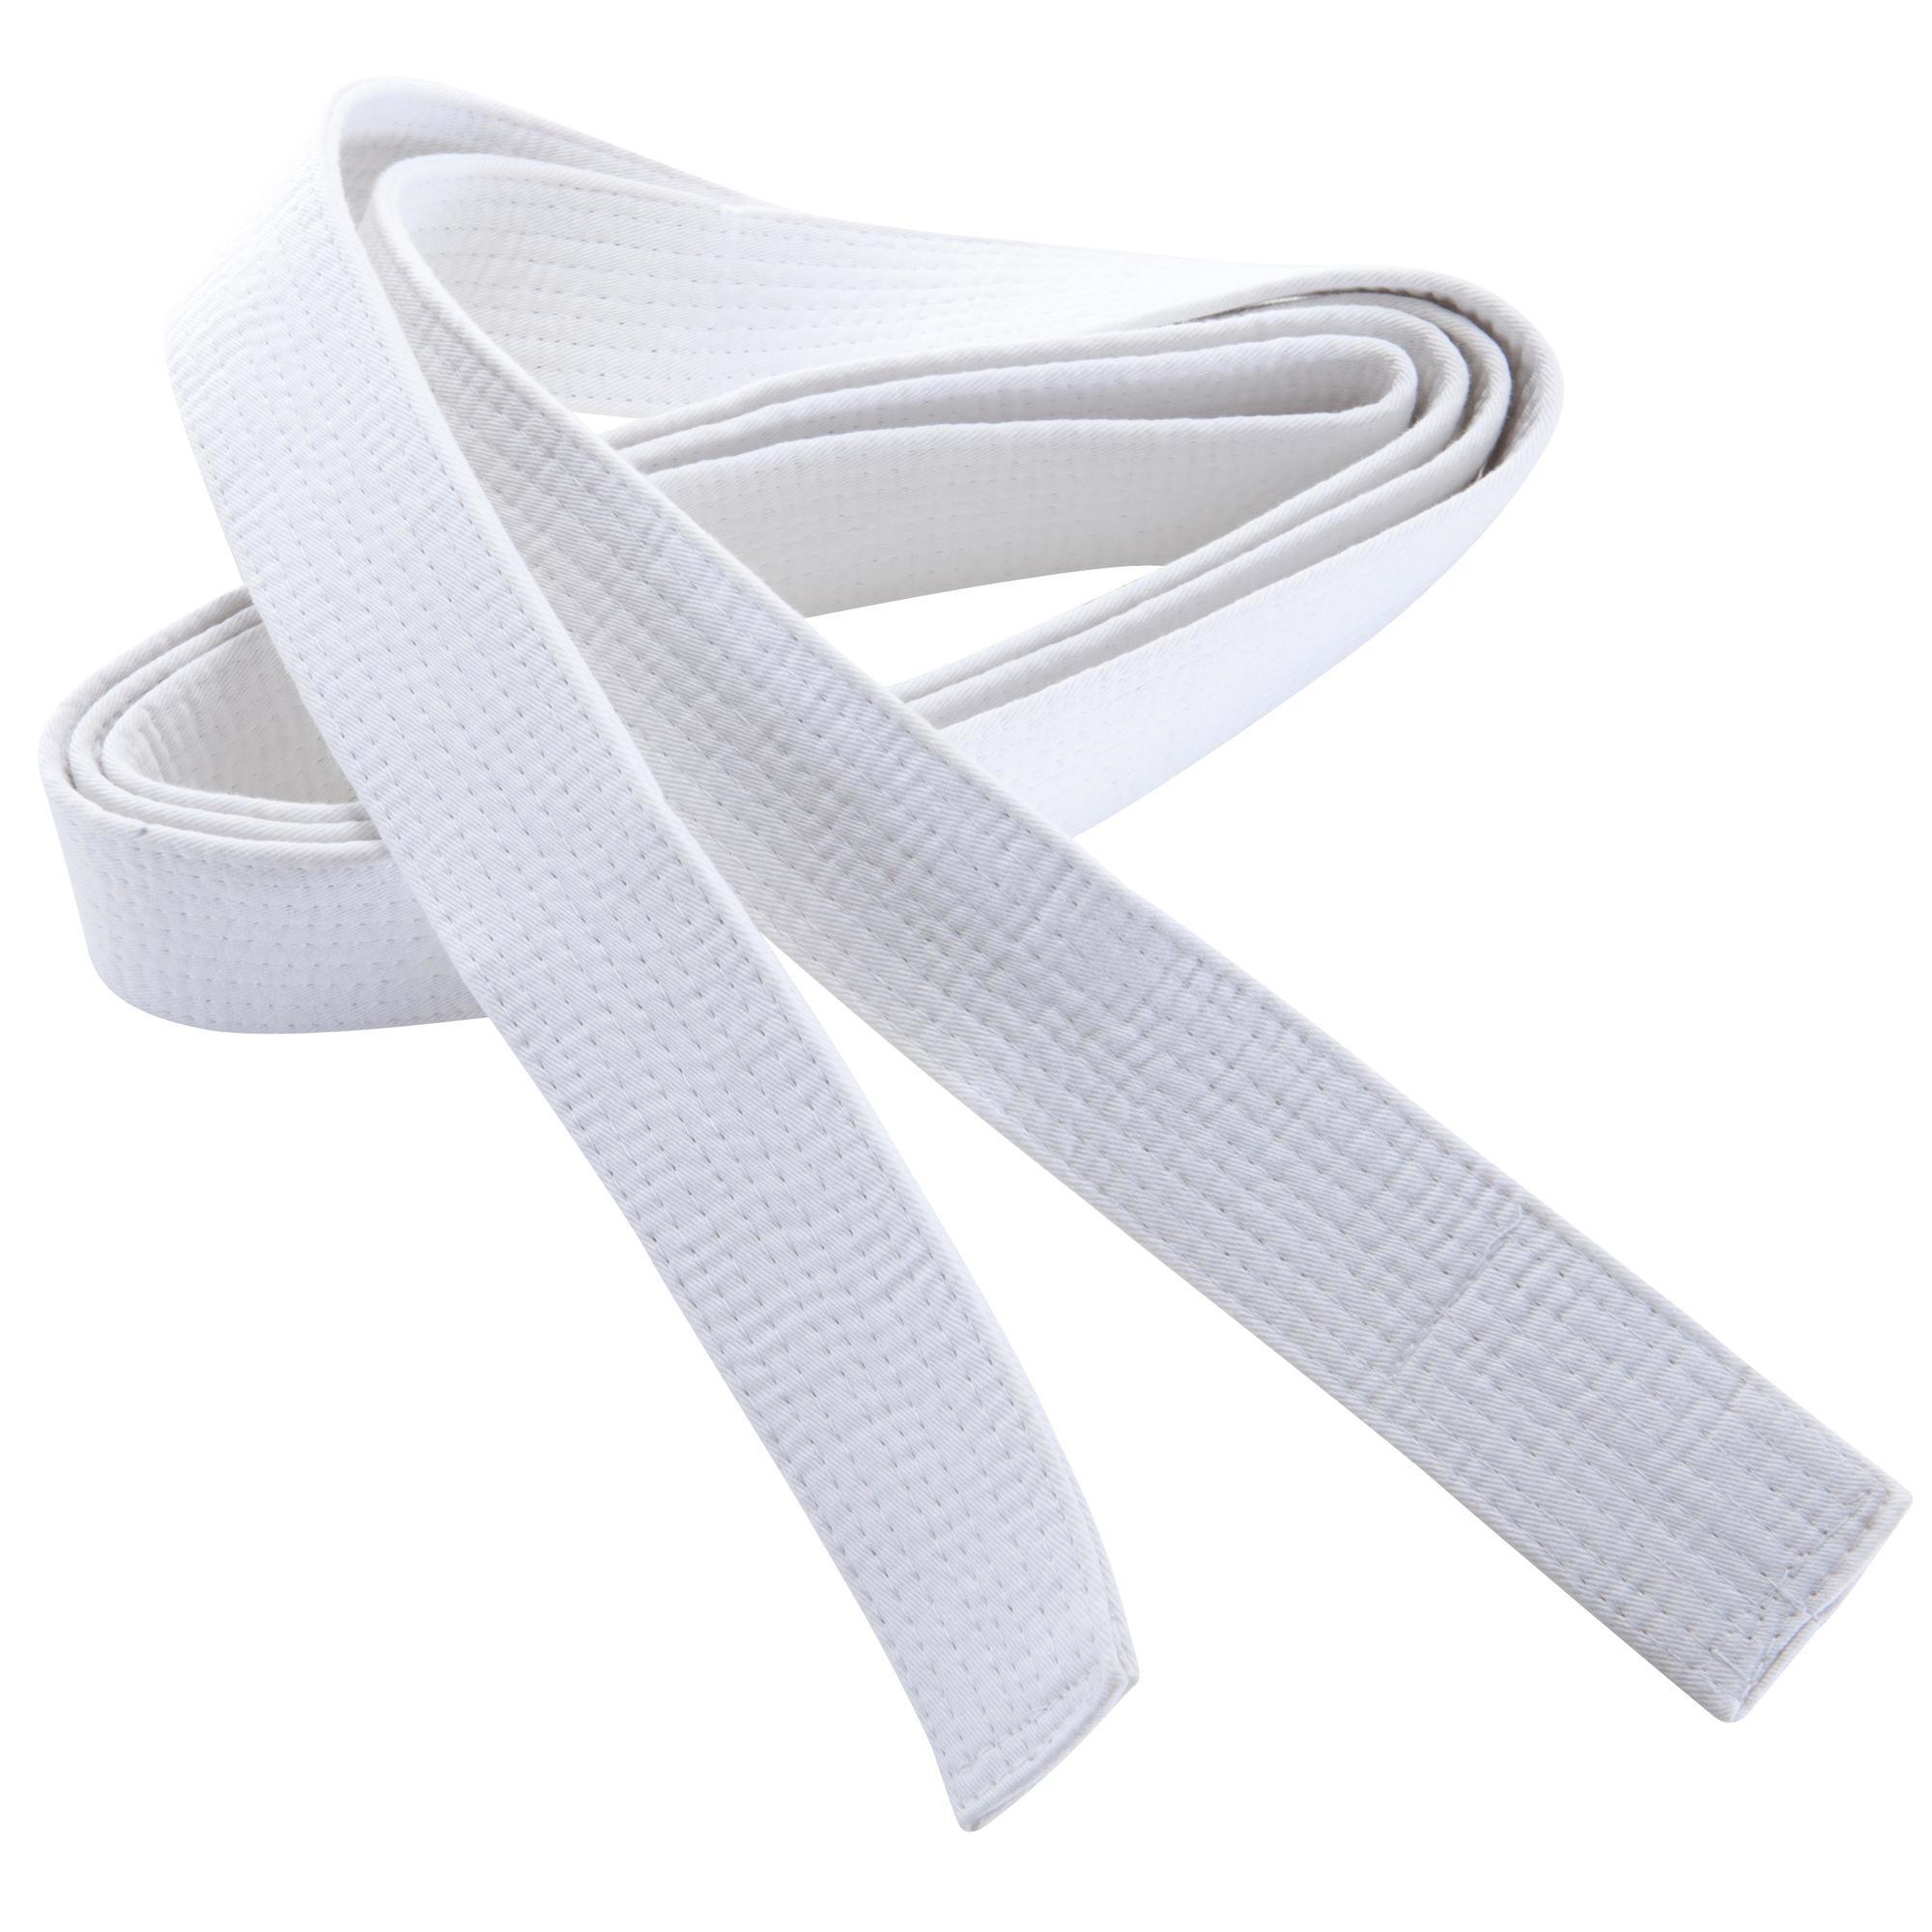 White belts